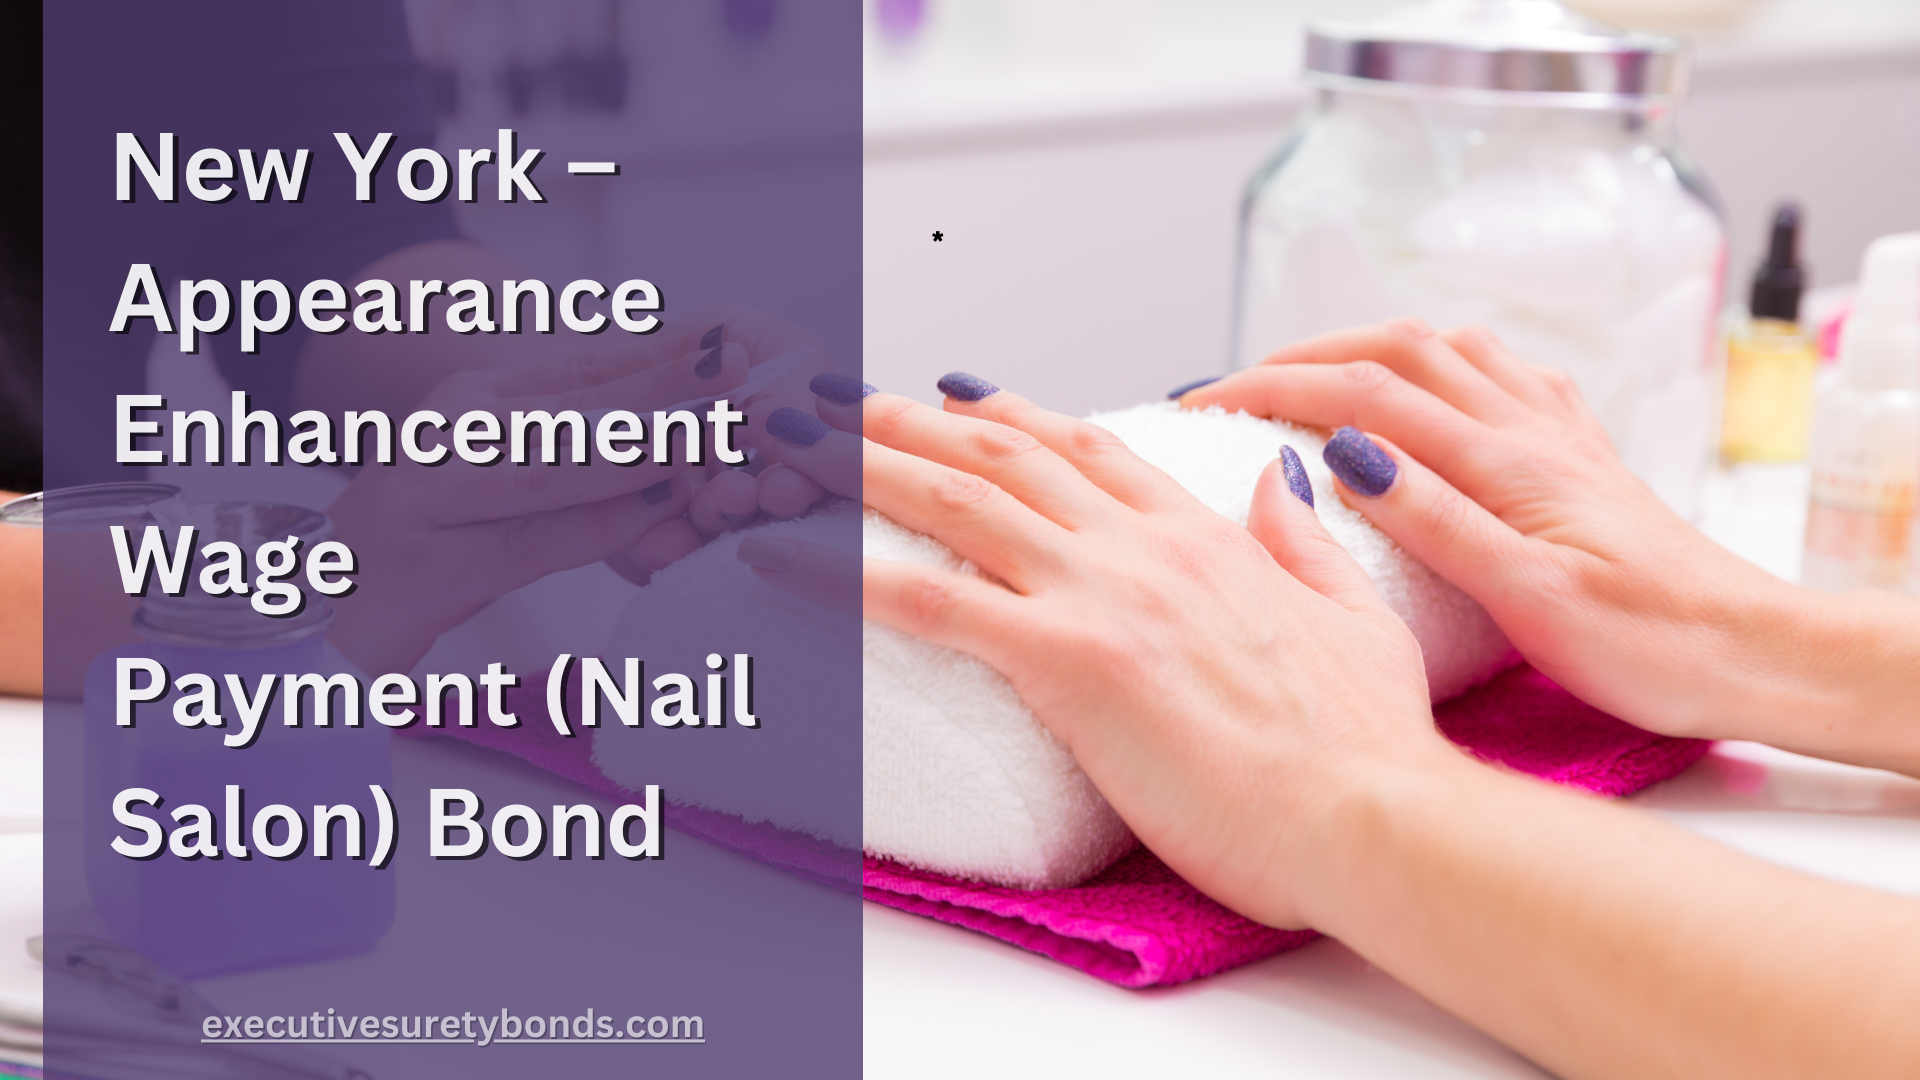 New York – Appearance Enhancement Wage Payment (Nail Salon) Bond